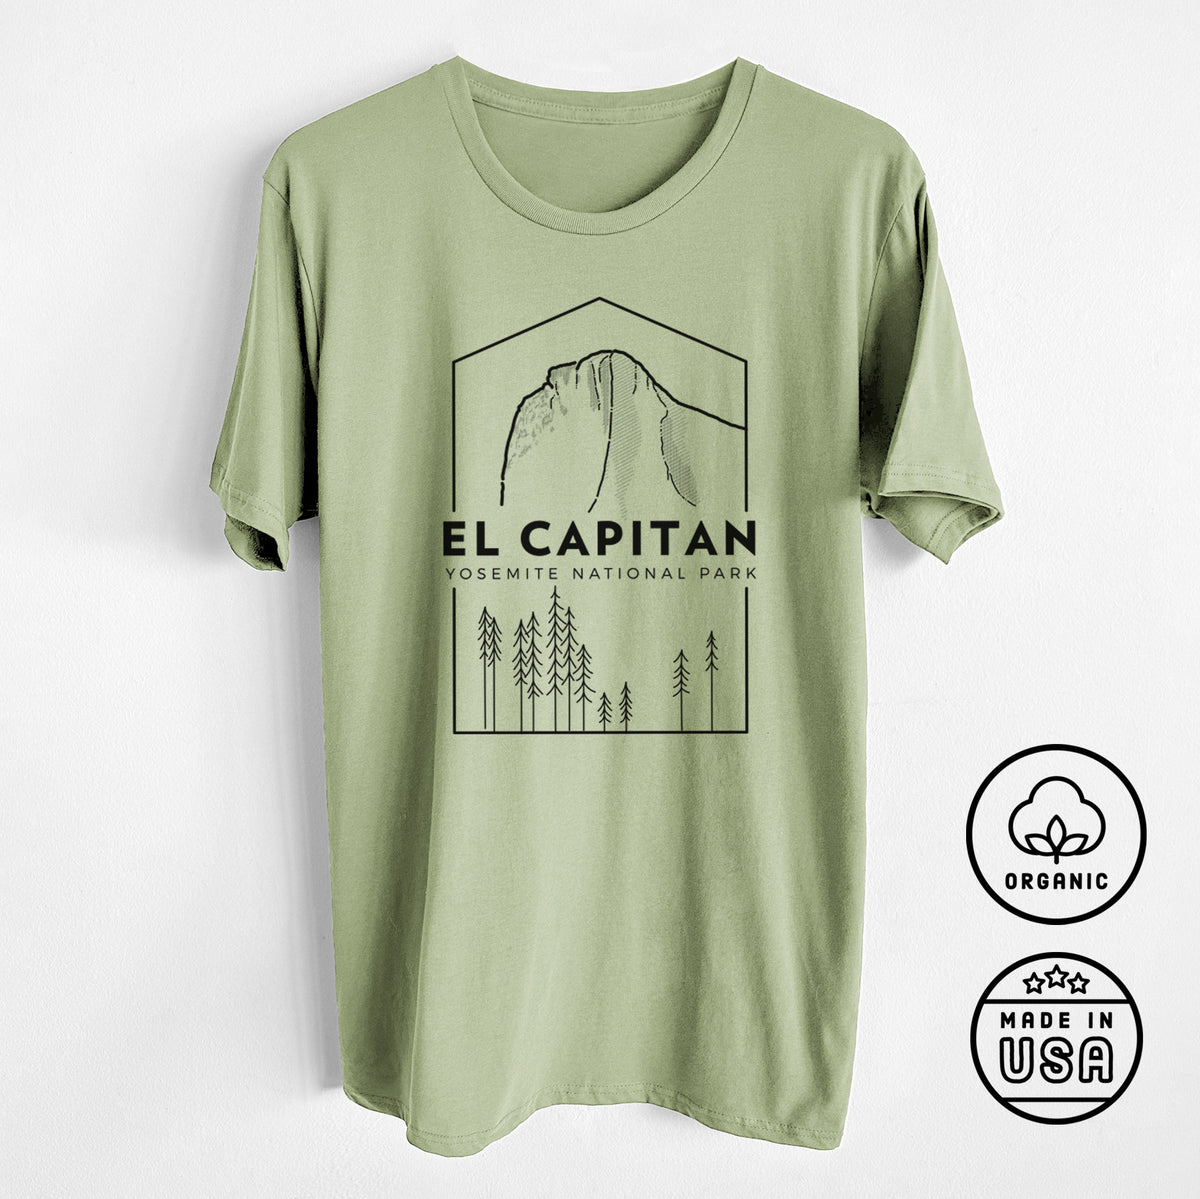 El Capitan - Yosemite National Park - Unisex Crewneck - Made in USA - 100% Organic Cotton